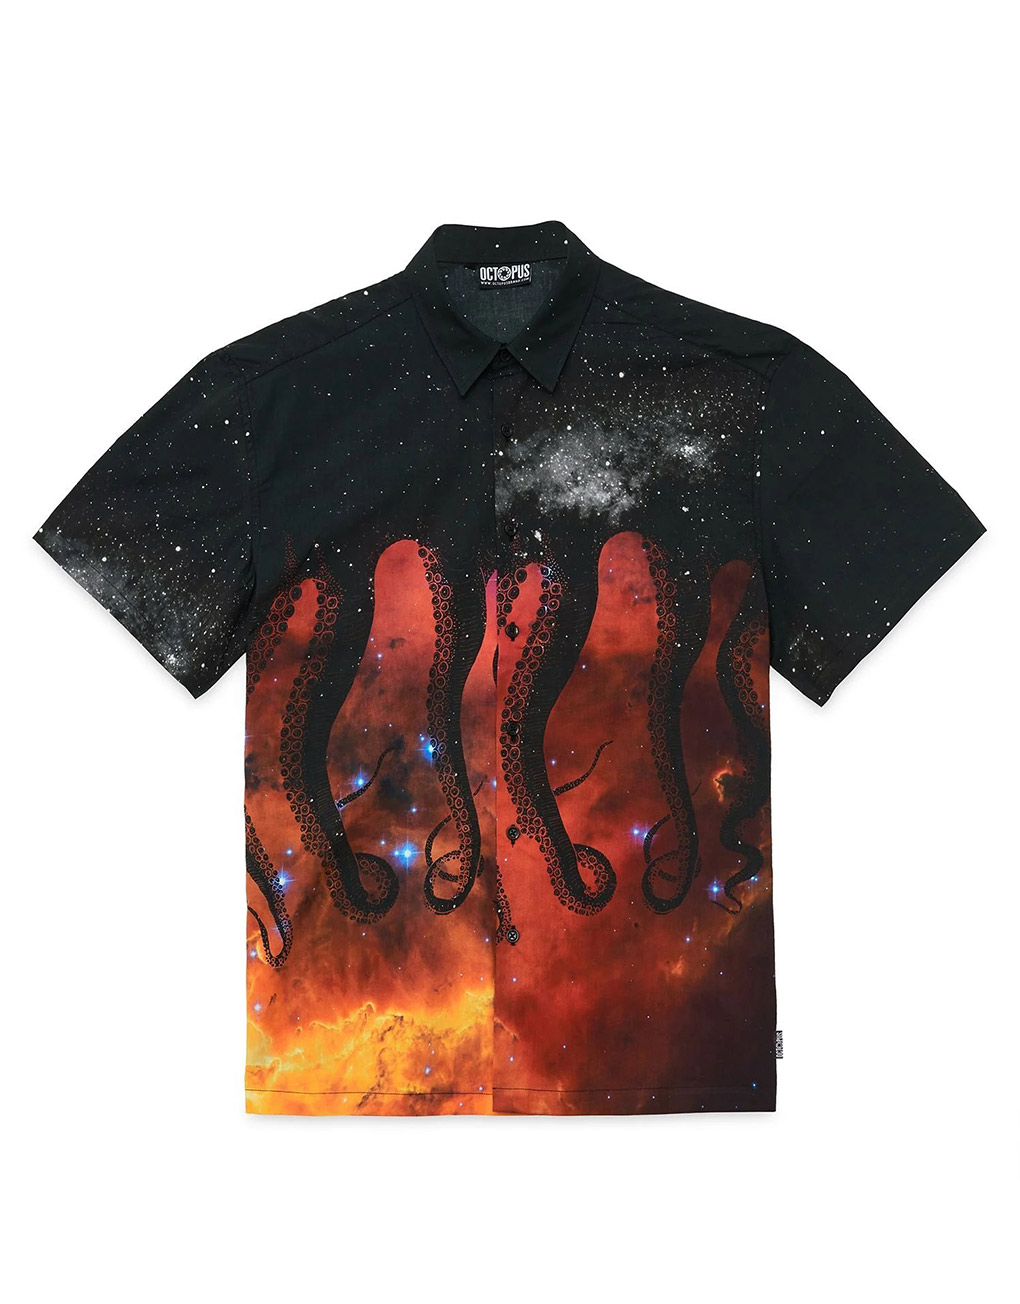 OCTOPUS – Galaxy shirt black